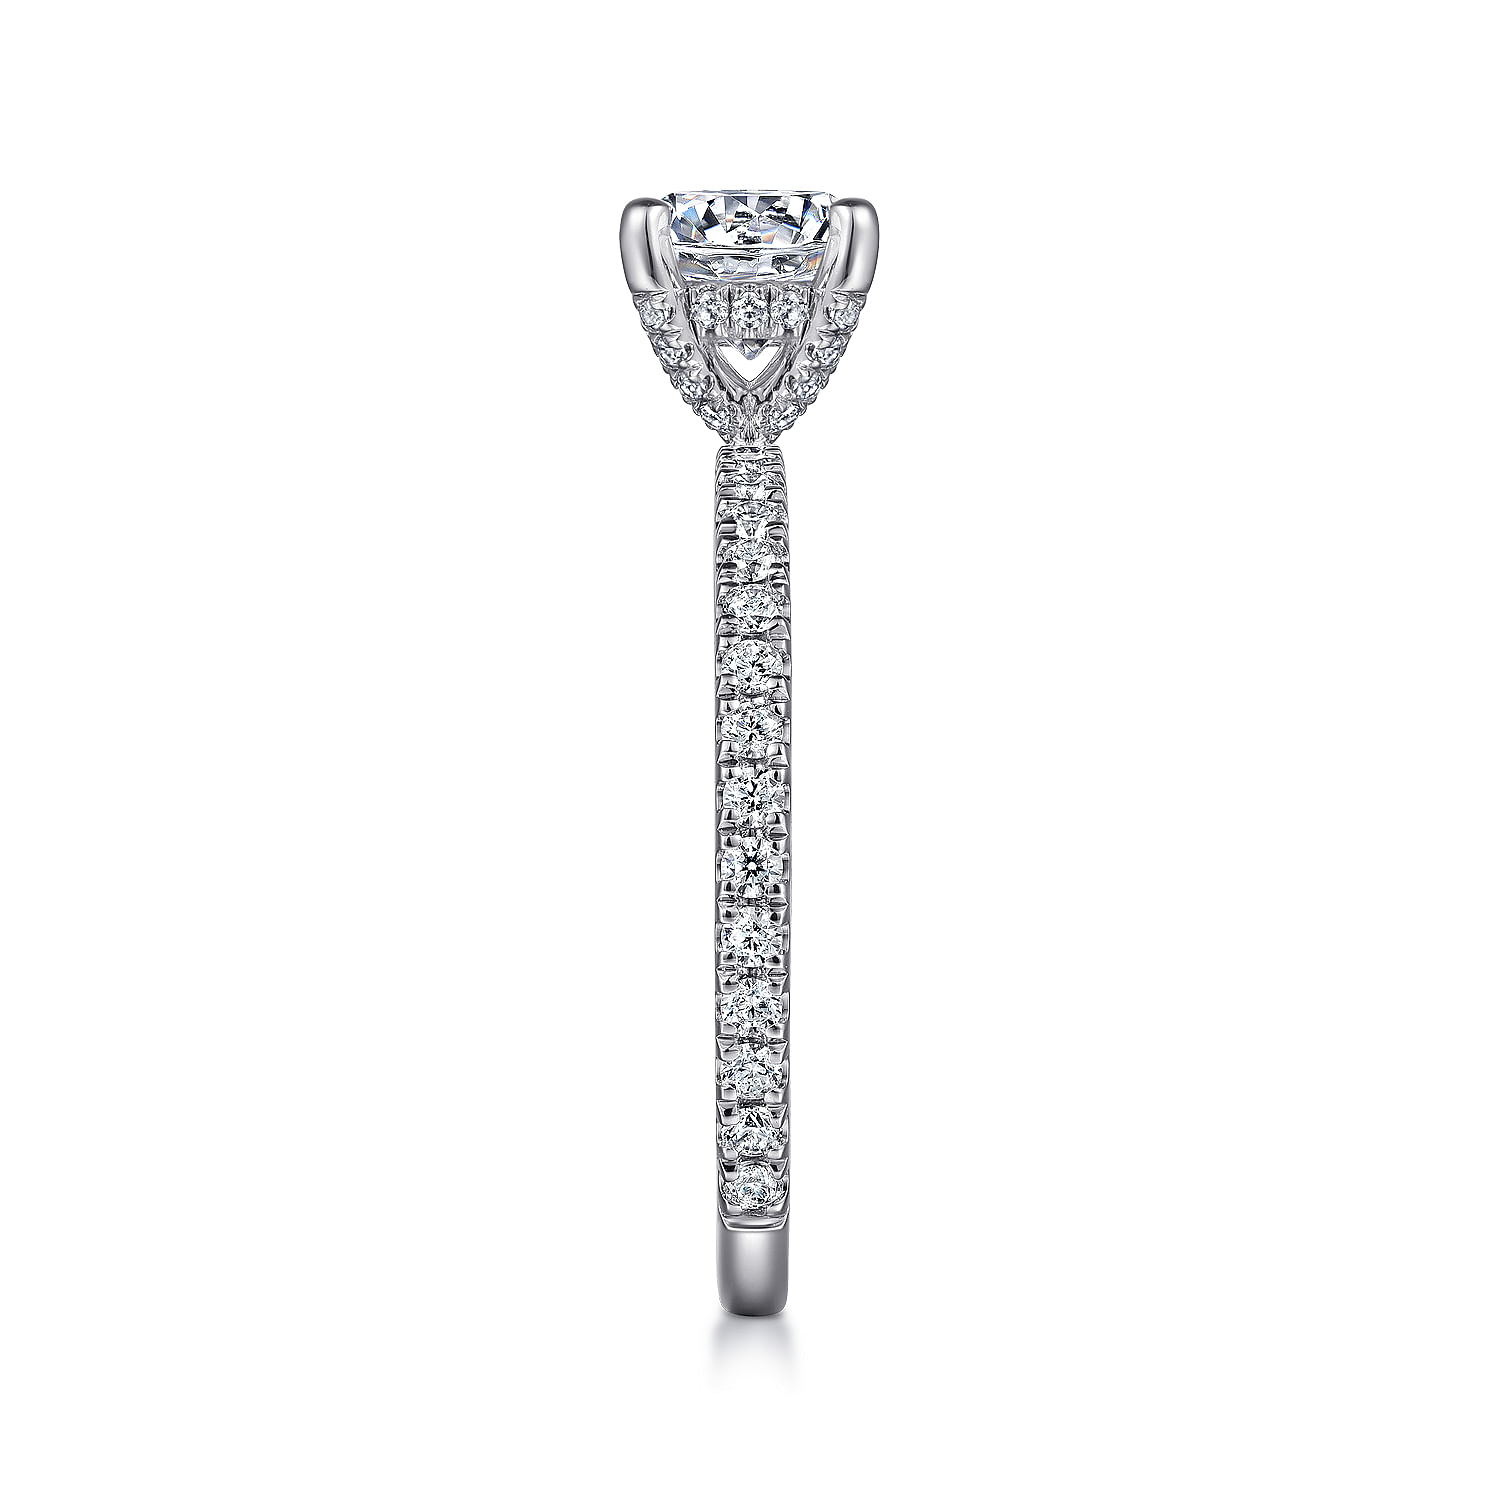 Round Cut Diamond Engagement Rings: Simple Circular Design | Gabriel & Co.